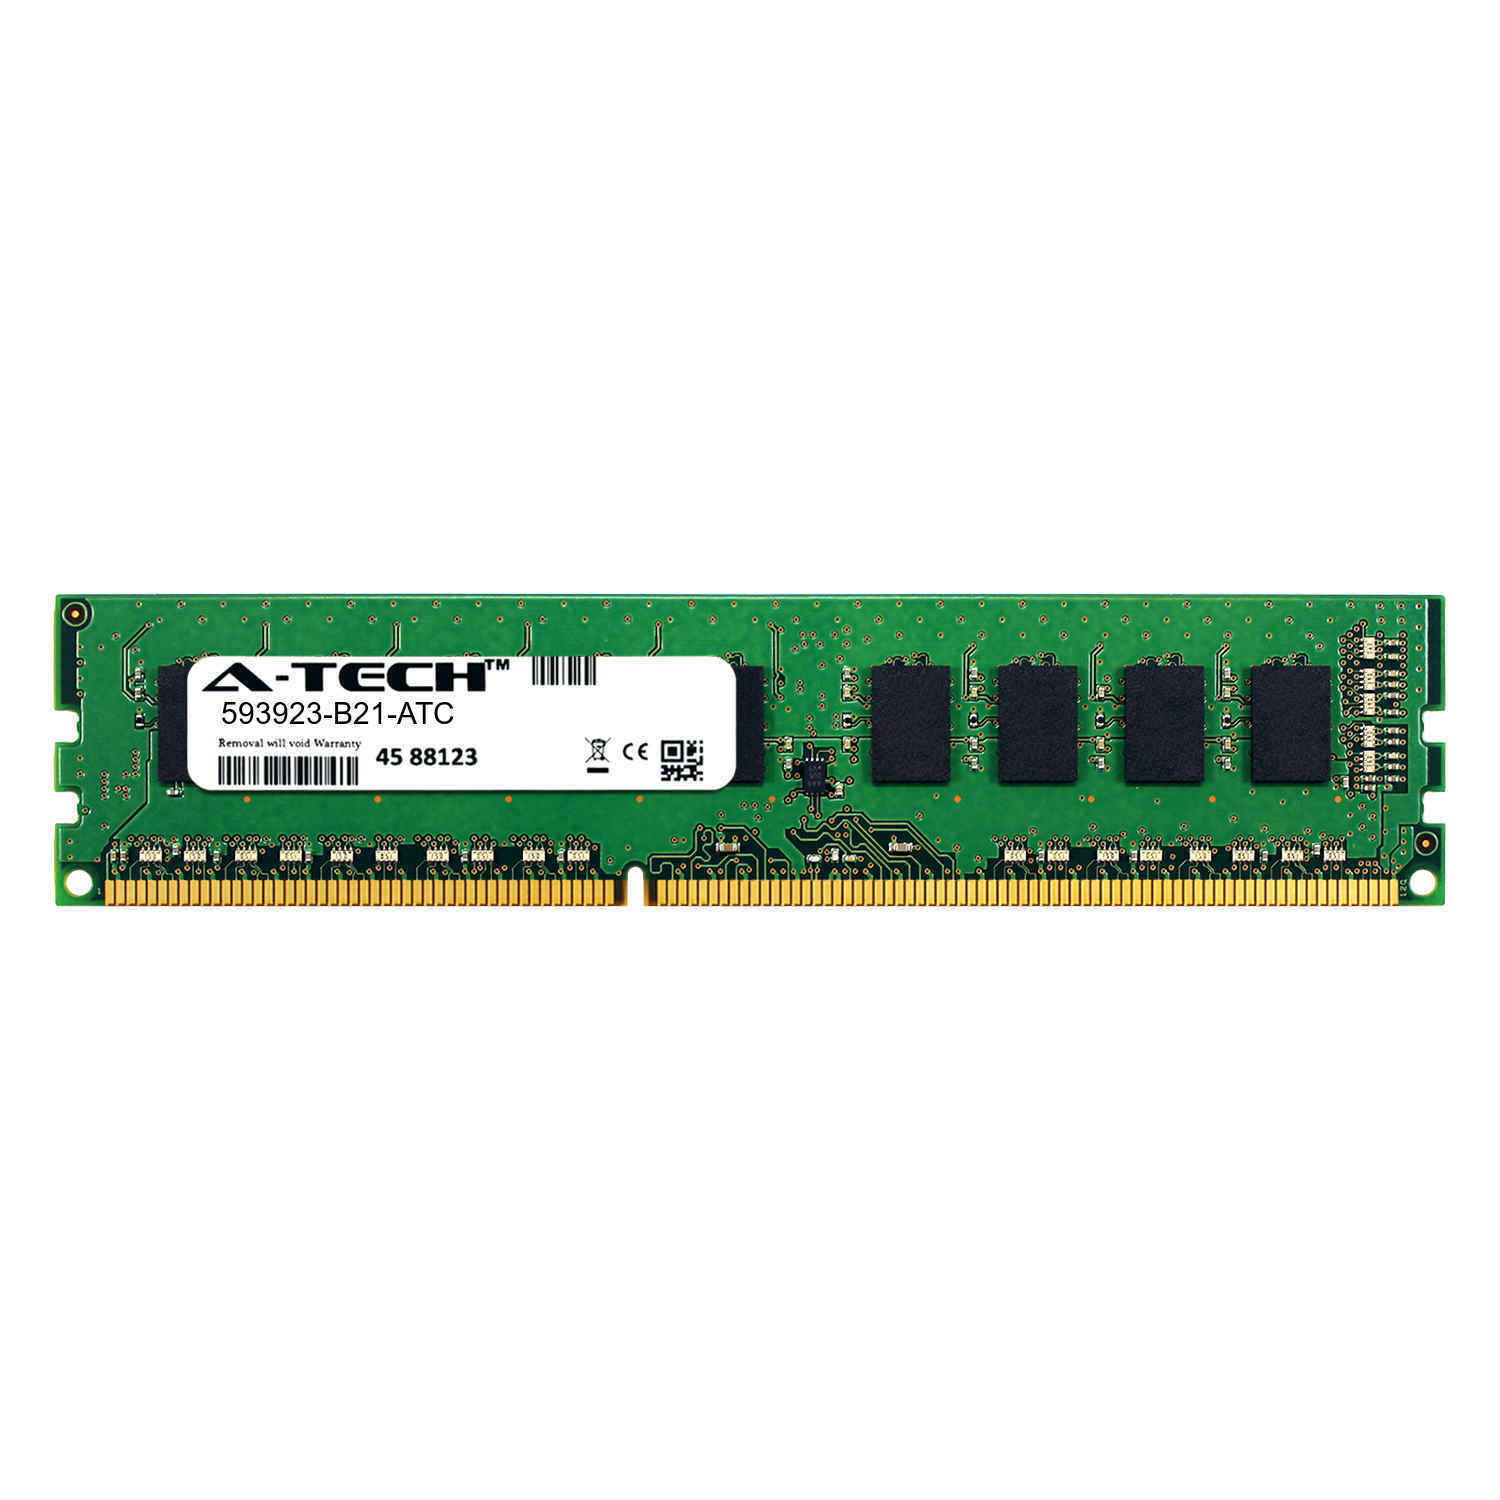 4GB DDR3 PC3-10600E ECC UDIMM (HP 593923-B21 Equivalent) Server Memory RAM